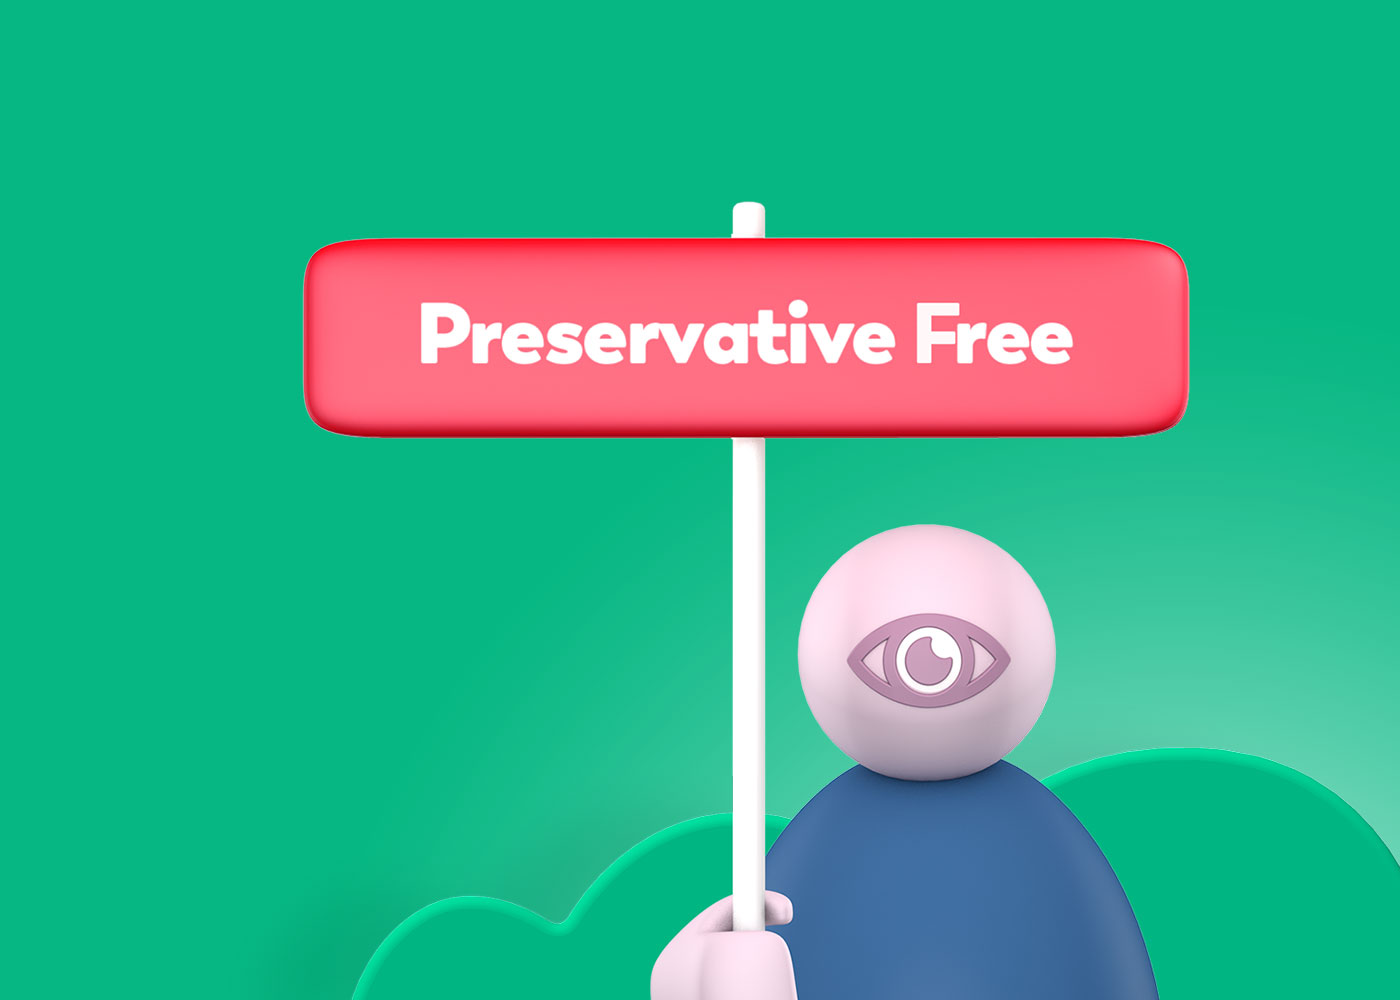 Preservative free pic